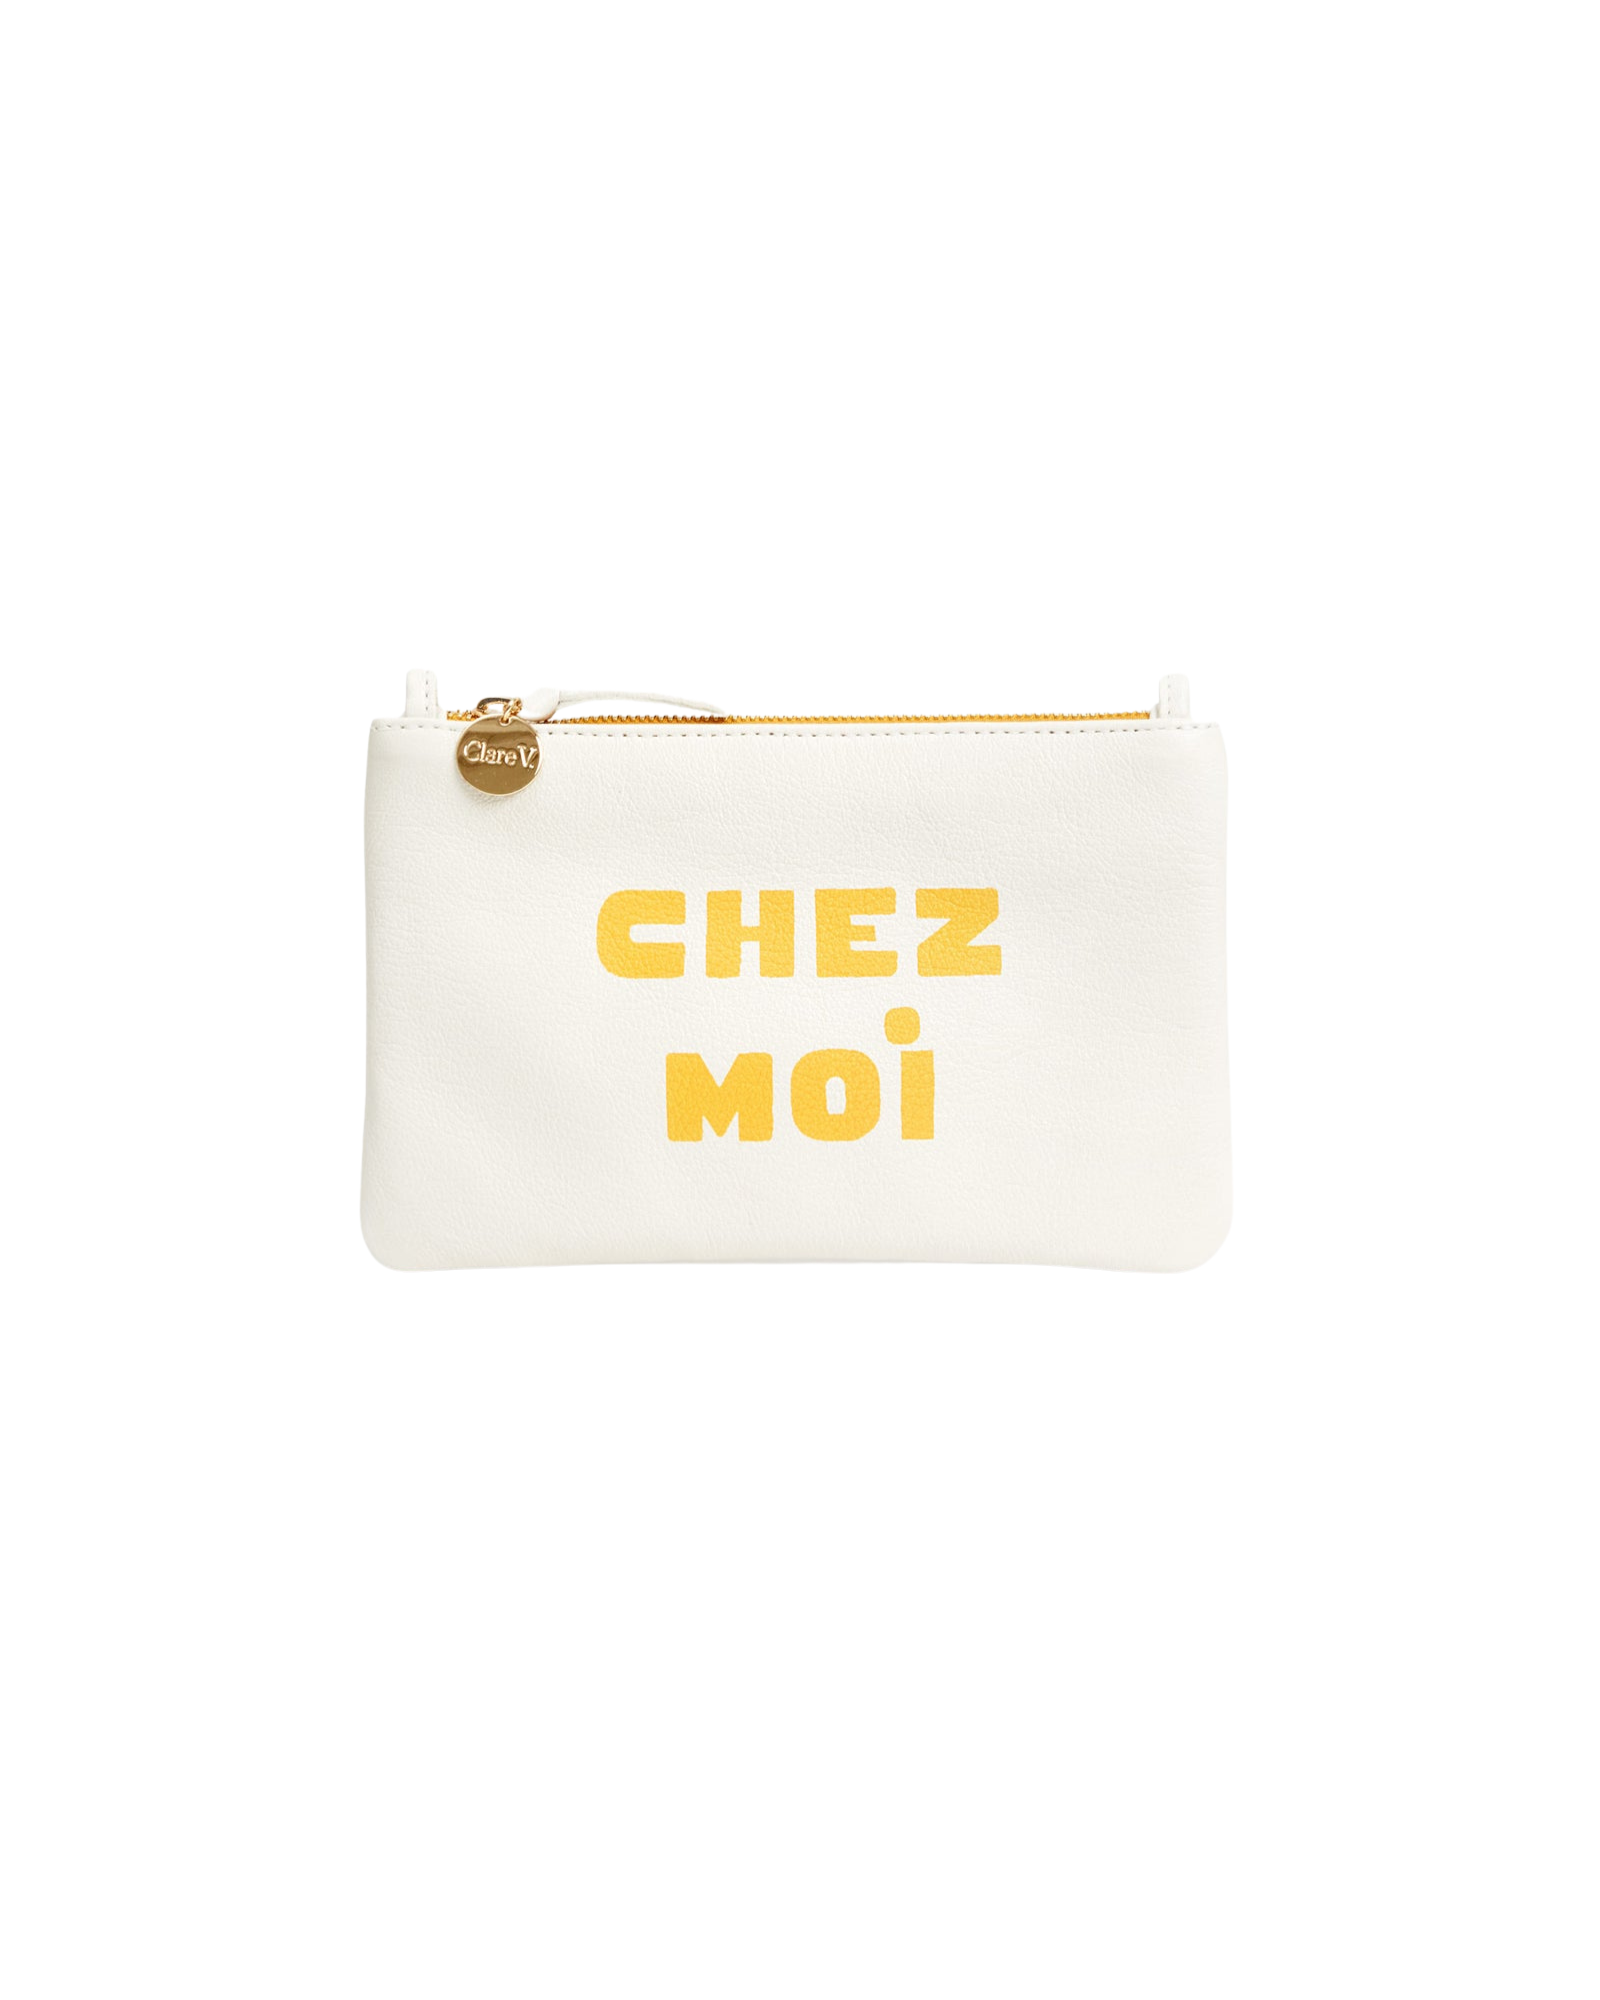 Clare V. Chez Moi Wallet Clutch in Cream